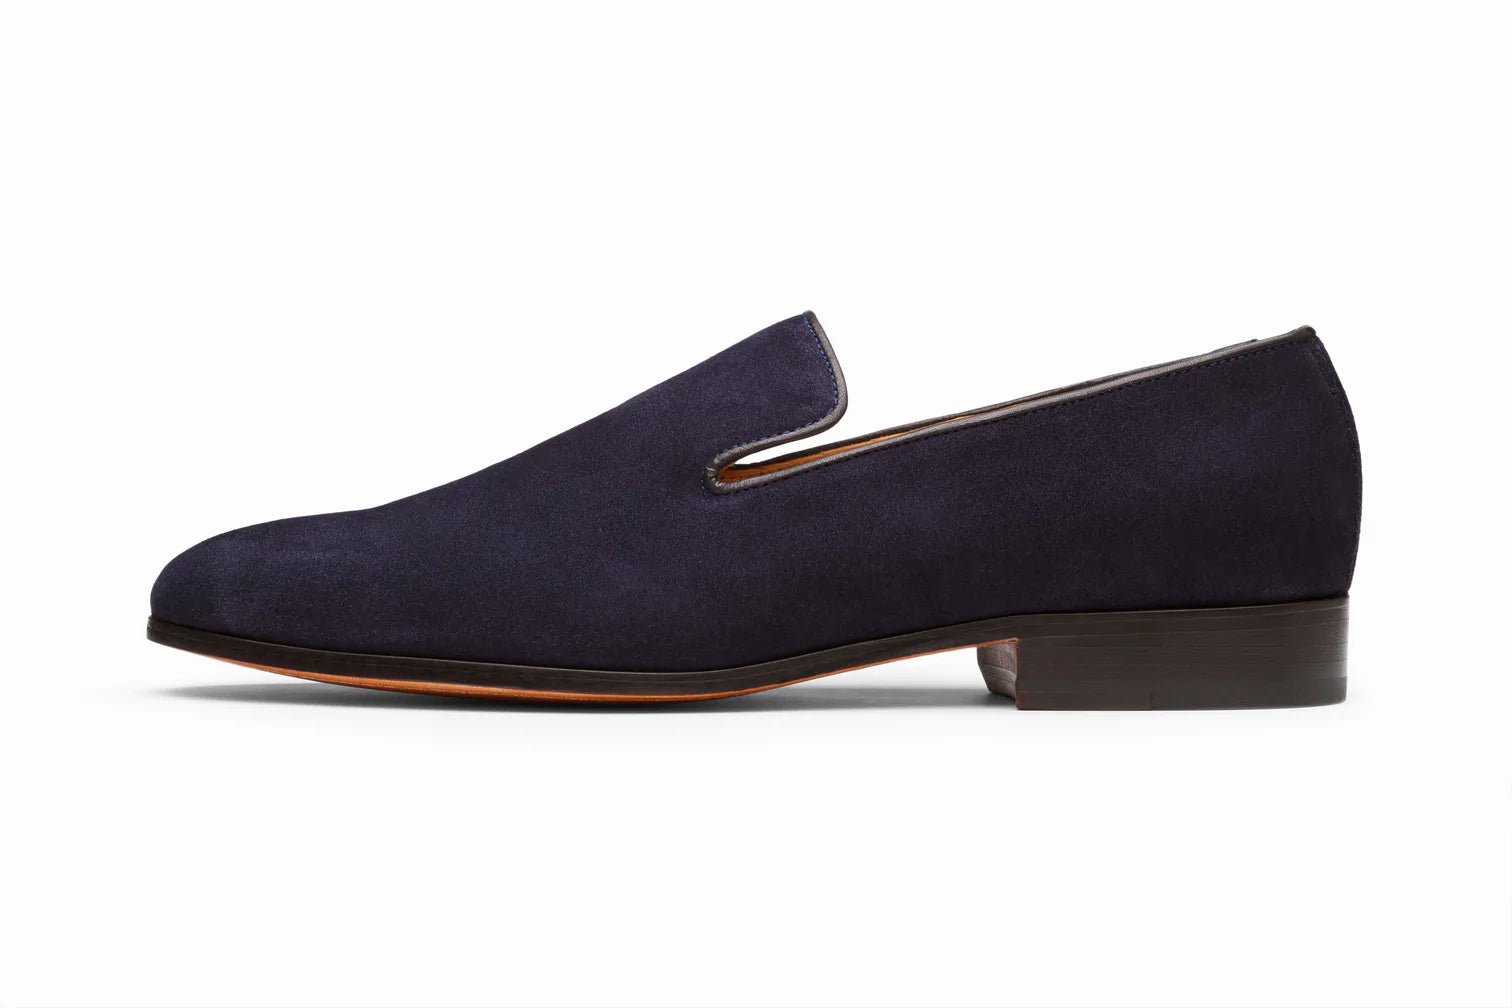 Venetian loafer navy suede, formal shoes for men in Dubai.